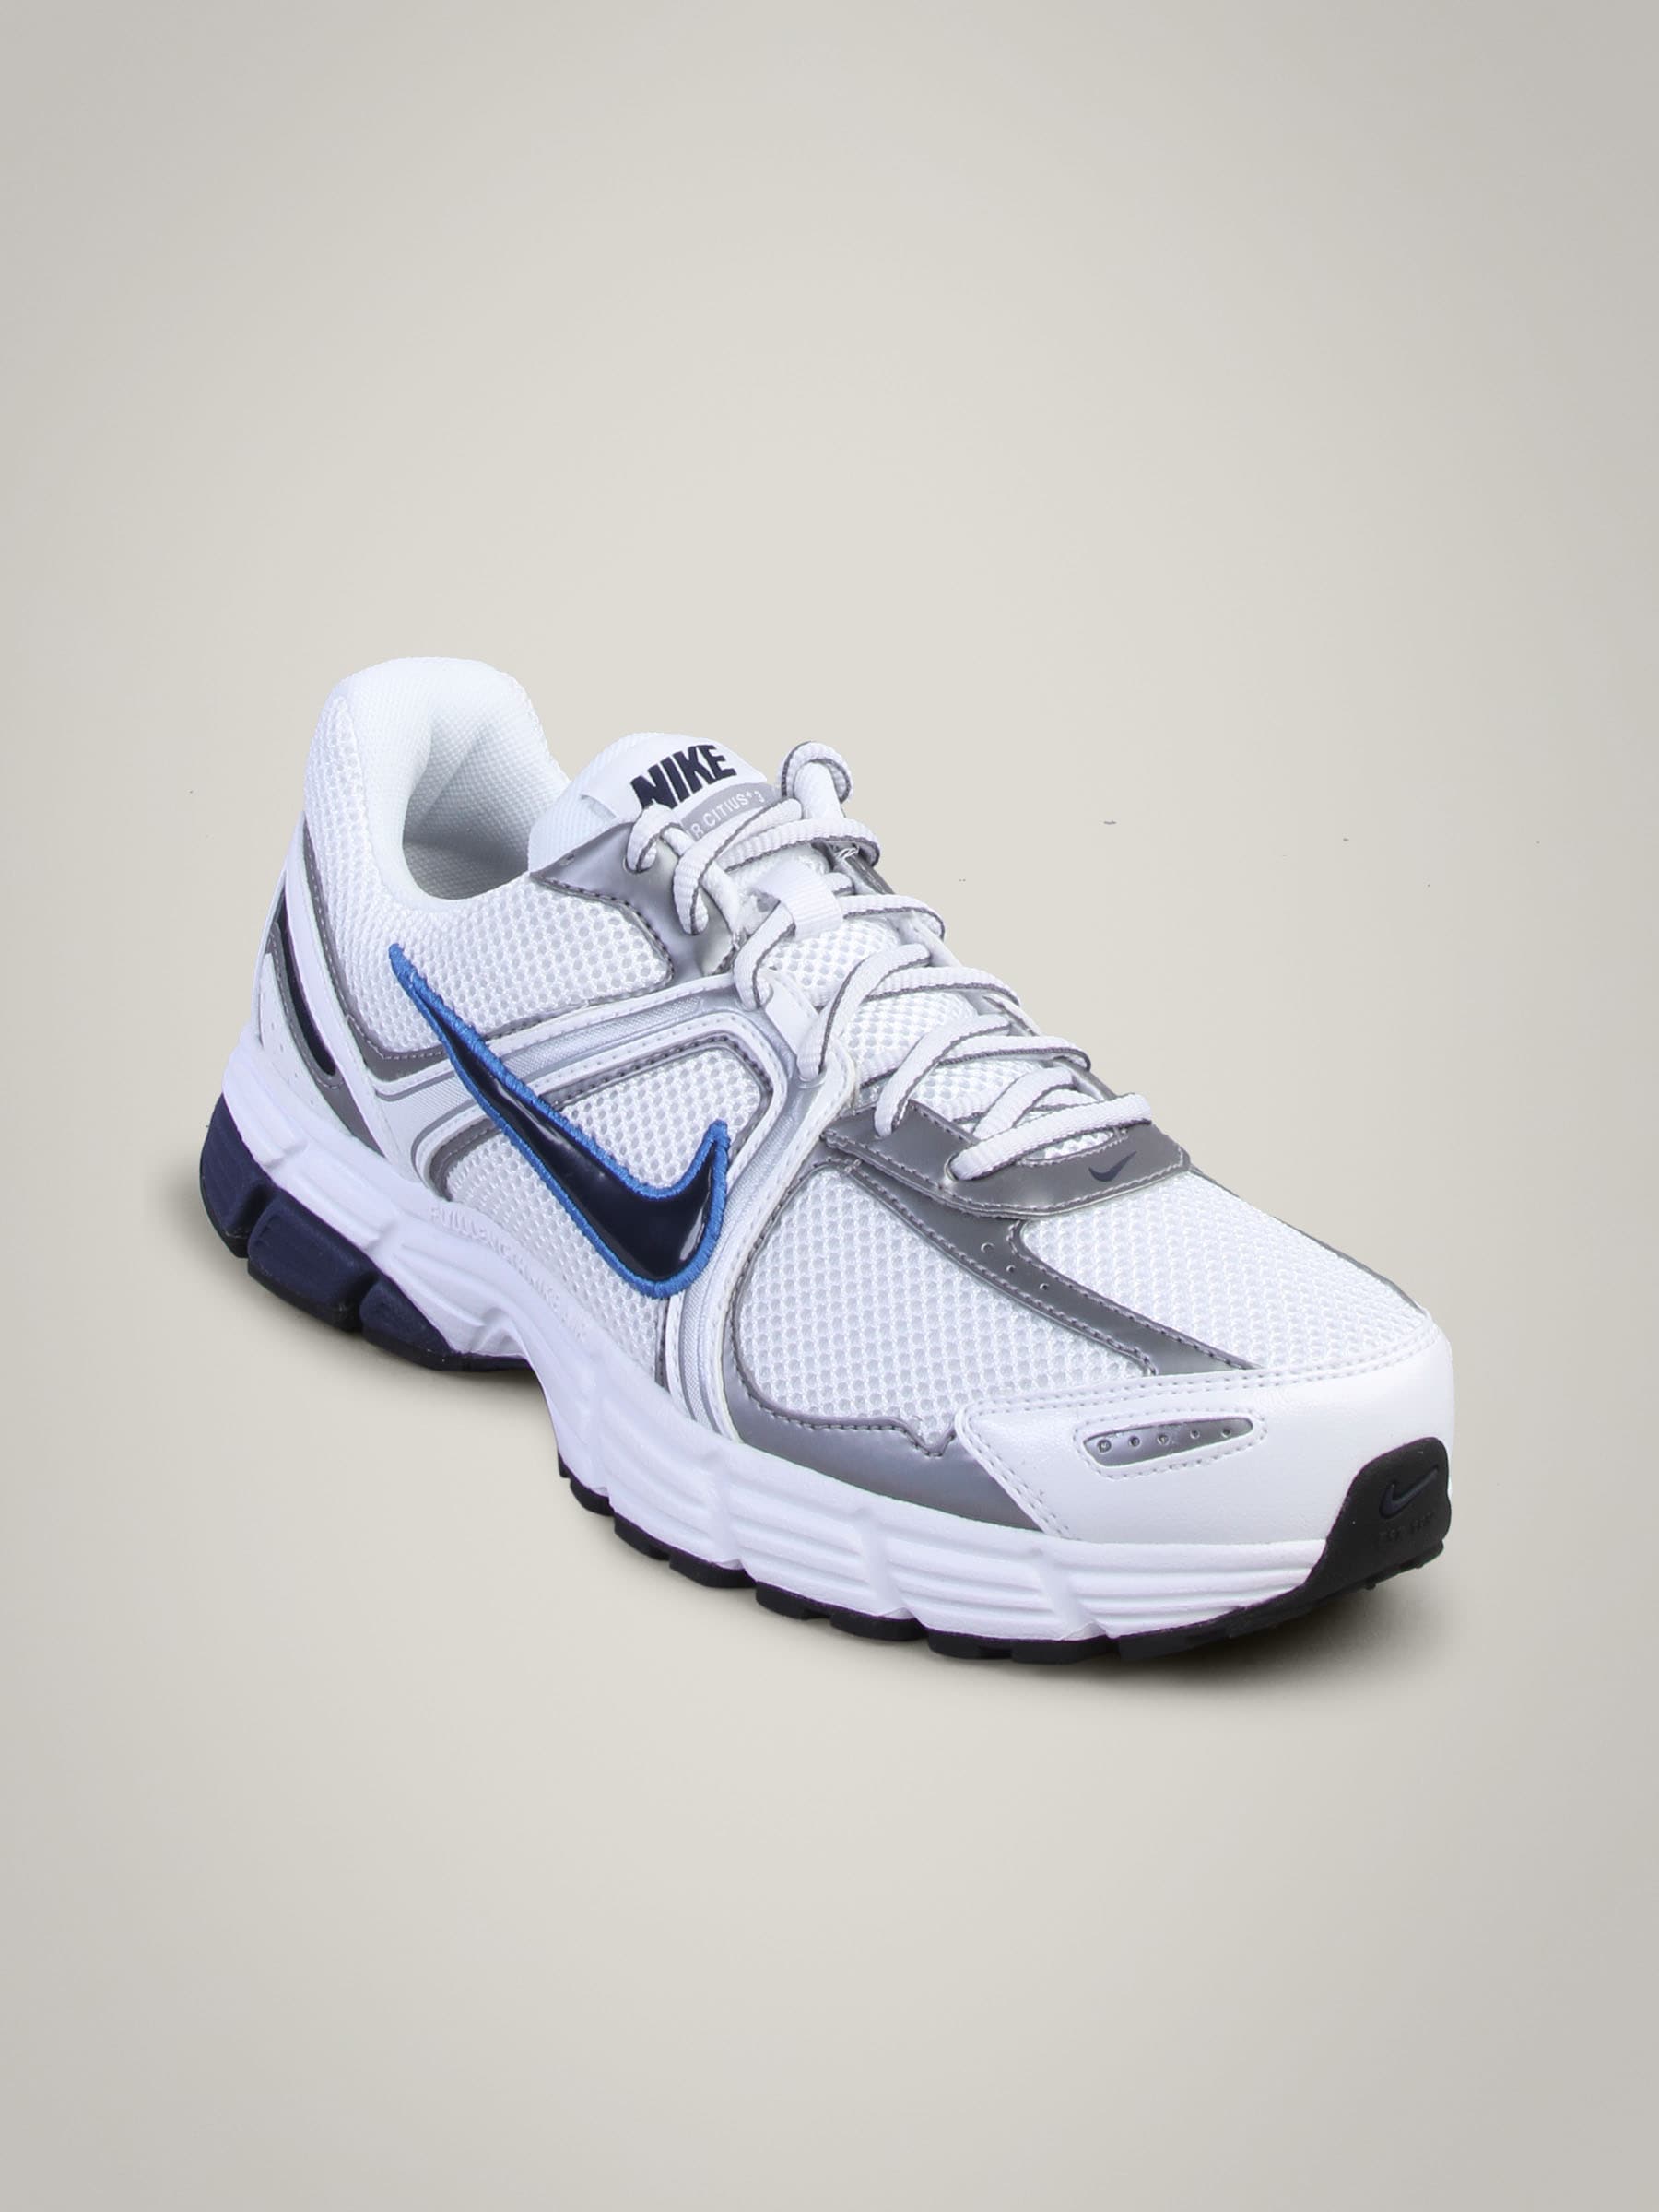 Nike Men's Air Citius MSL White Grey Shoe